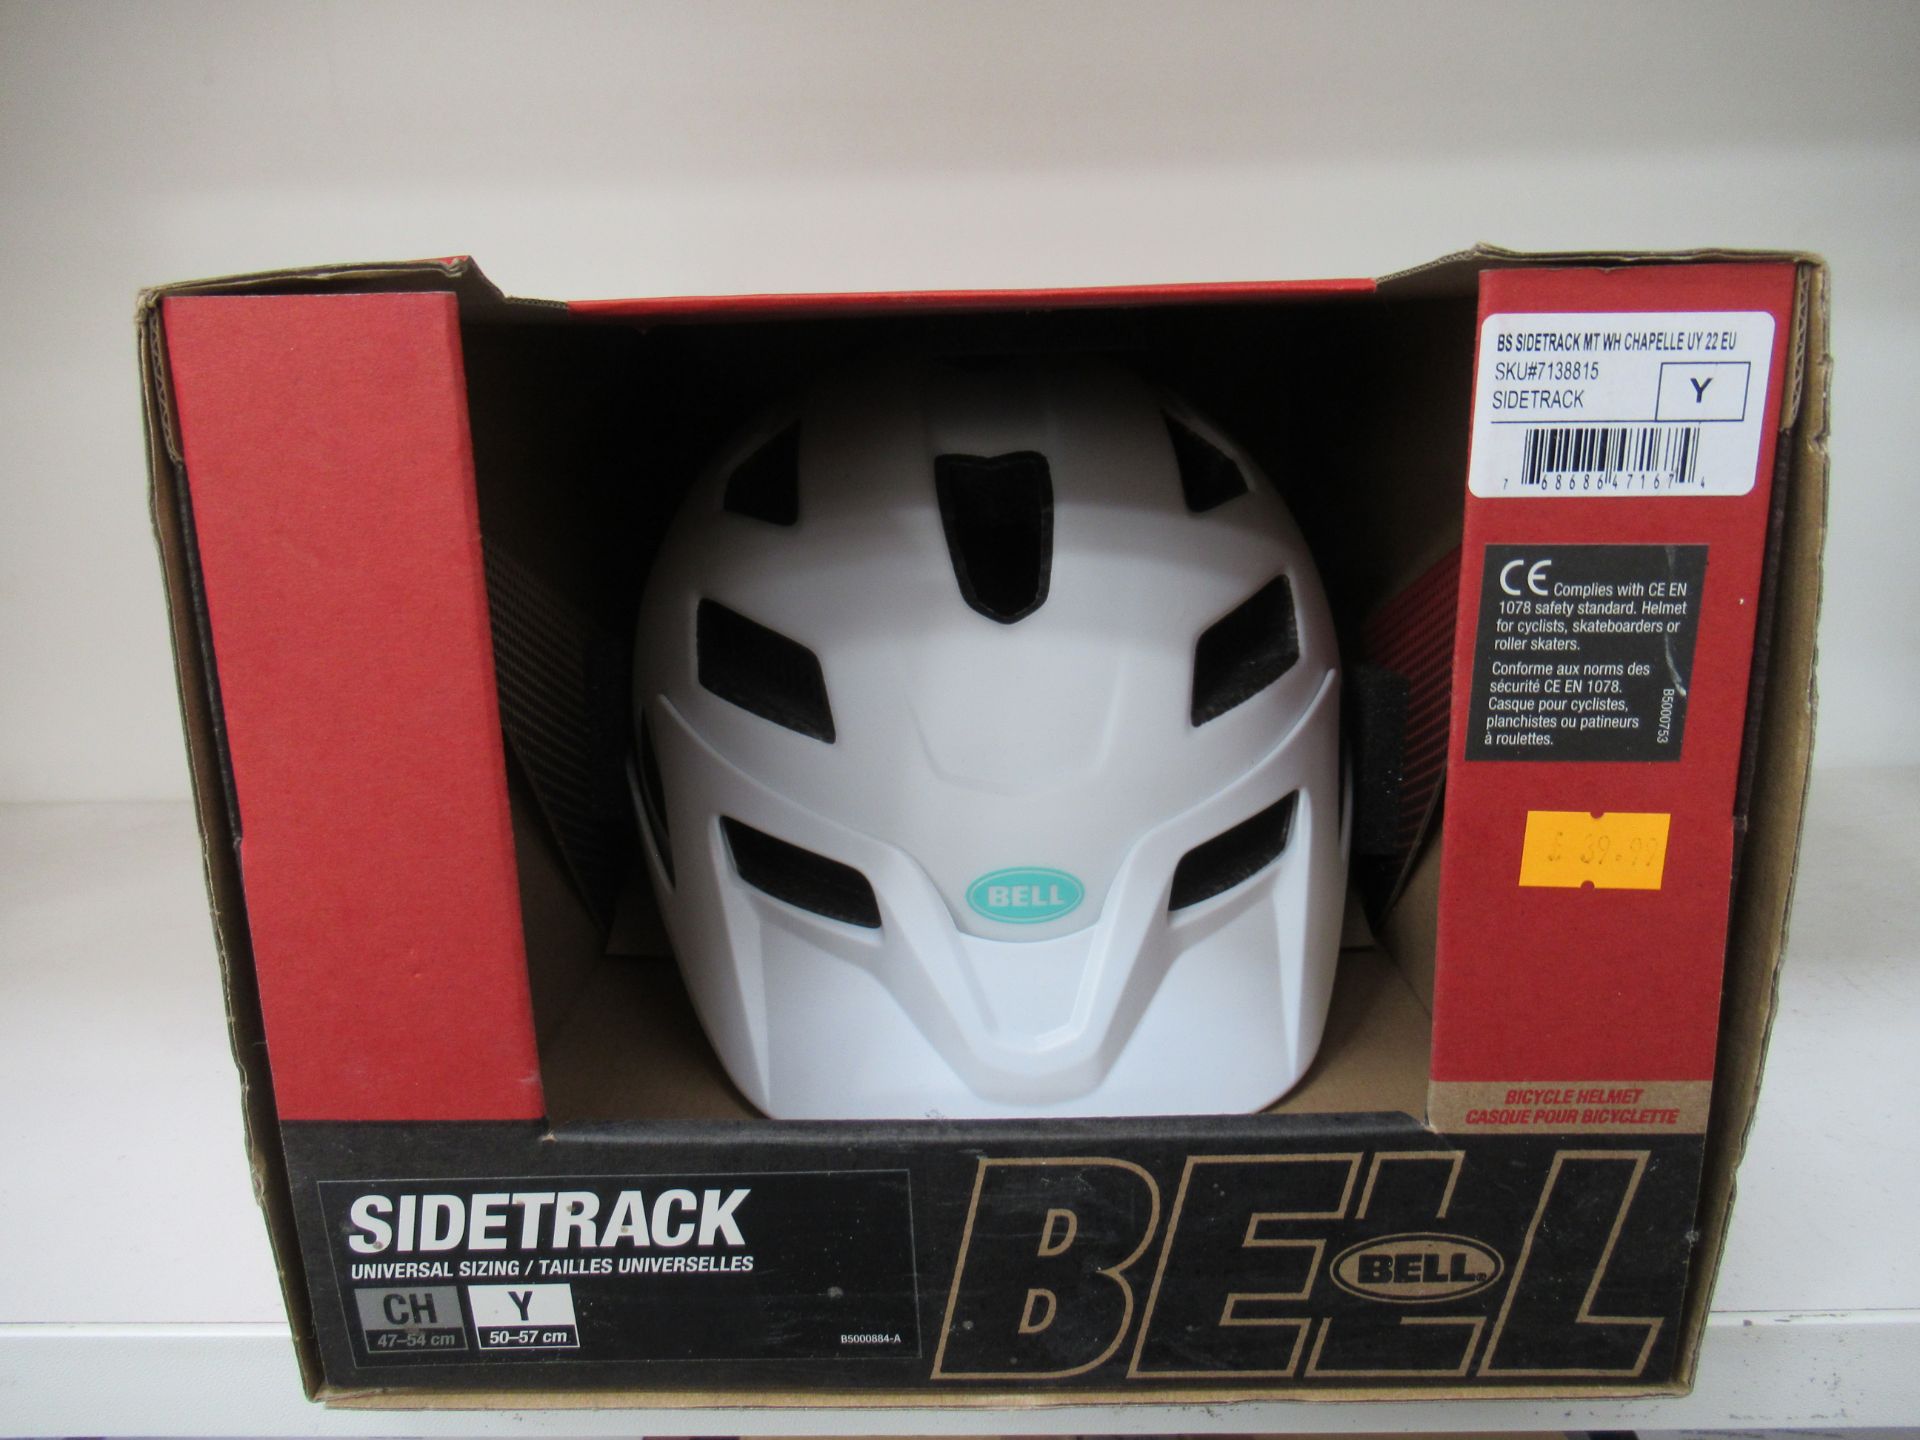 4 x Children's cycling helmets: 2 x MET ELDAR; 1 x Alpina Disney Jungle Book and 1 x Bell Sidetrack - Image 11 of 13